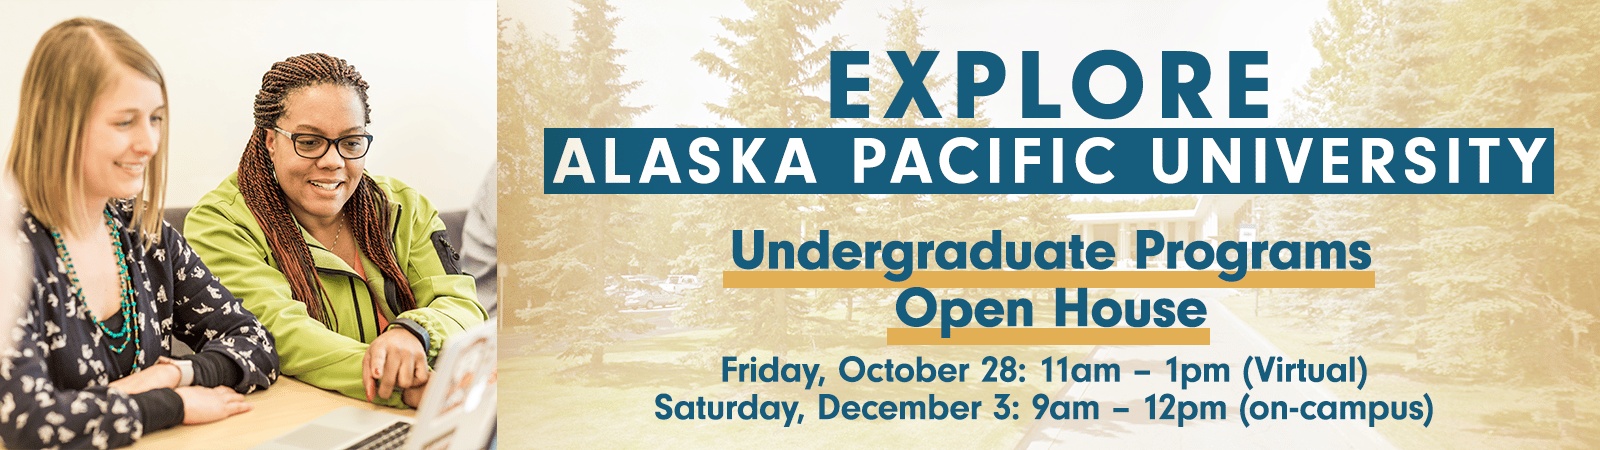 Explore Alaska Pacific University: Undergraduate Programs Open House